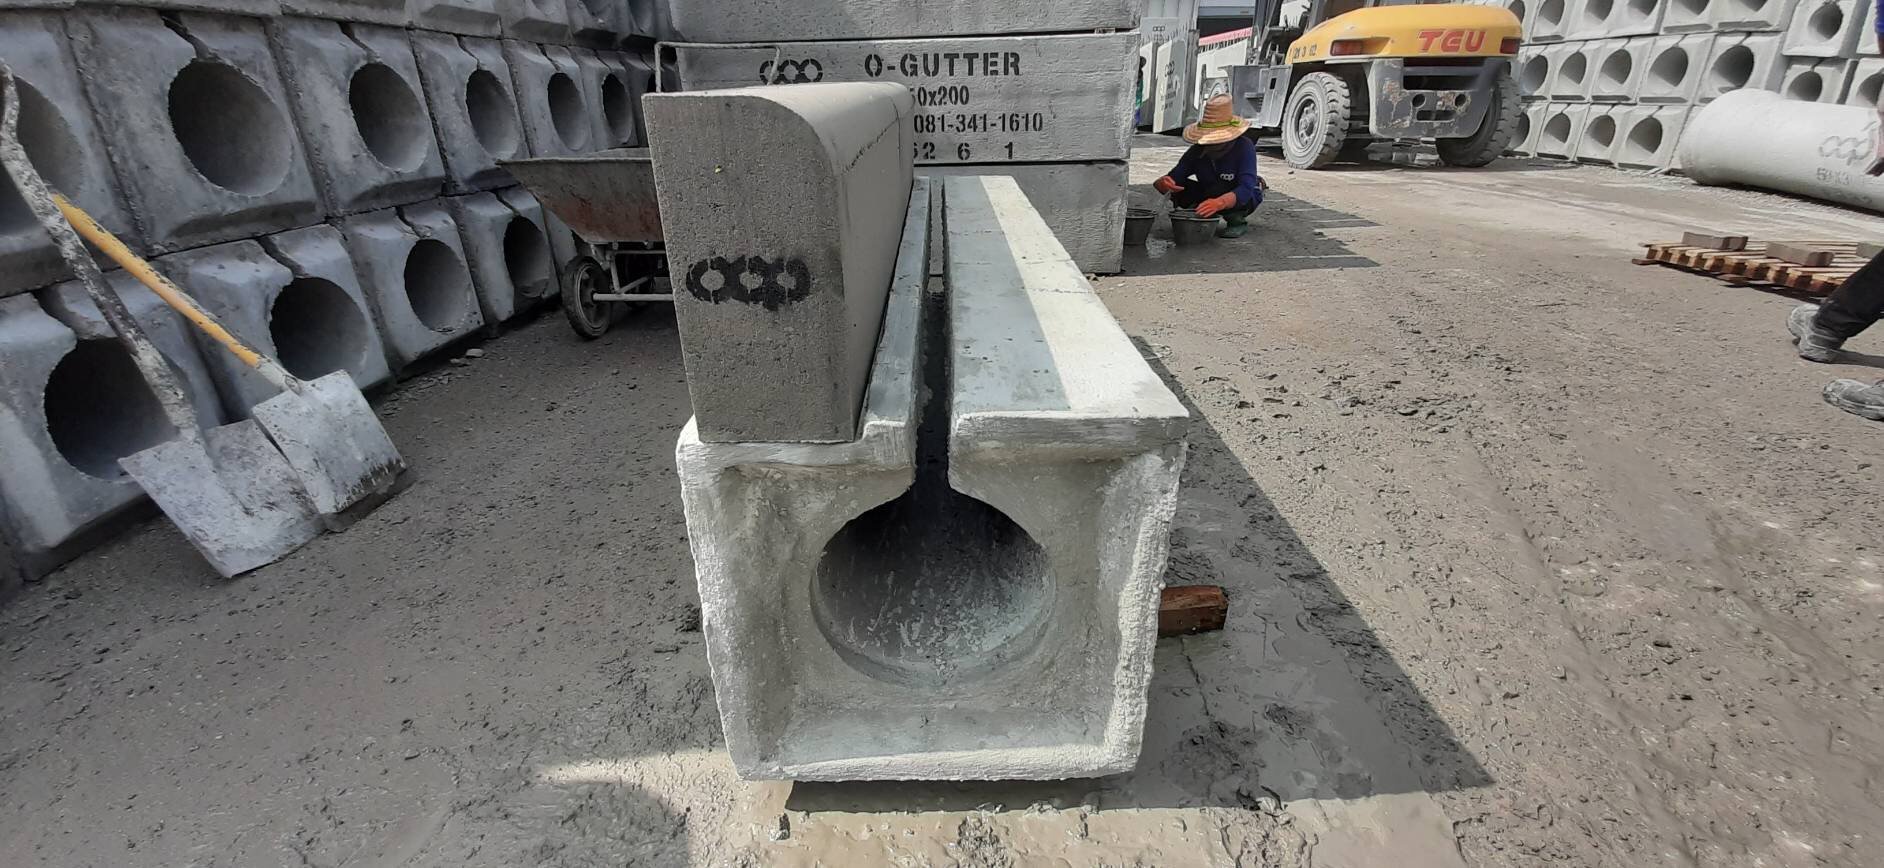 O gutter Curve stone O 型混凝土排水管用弧形路缘石